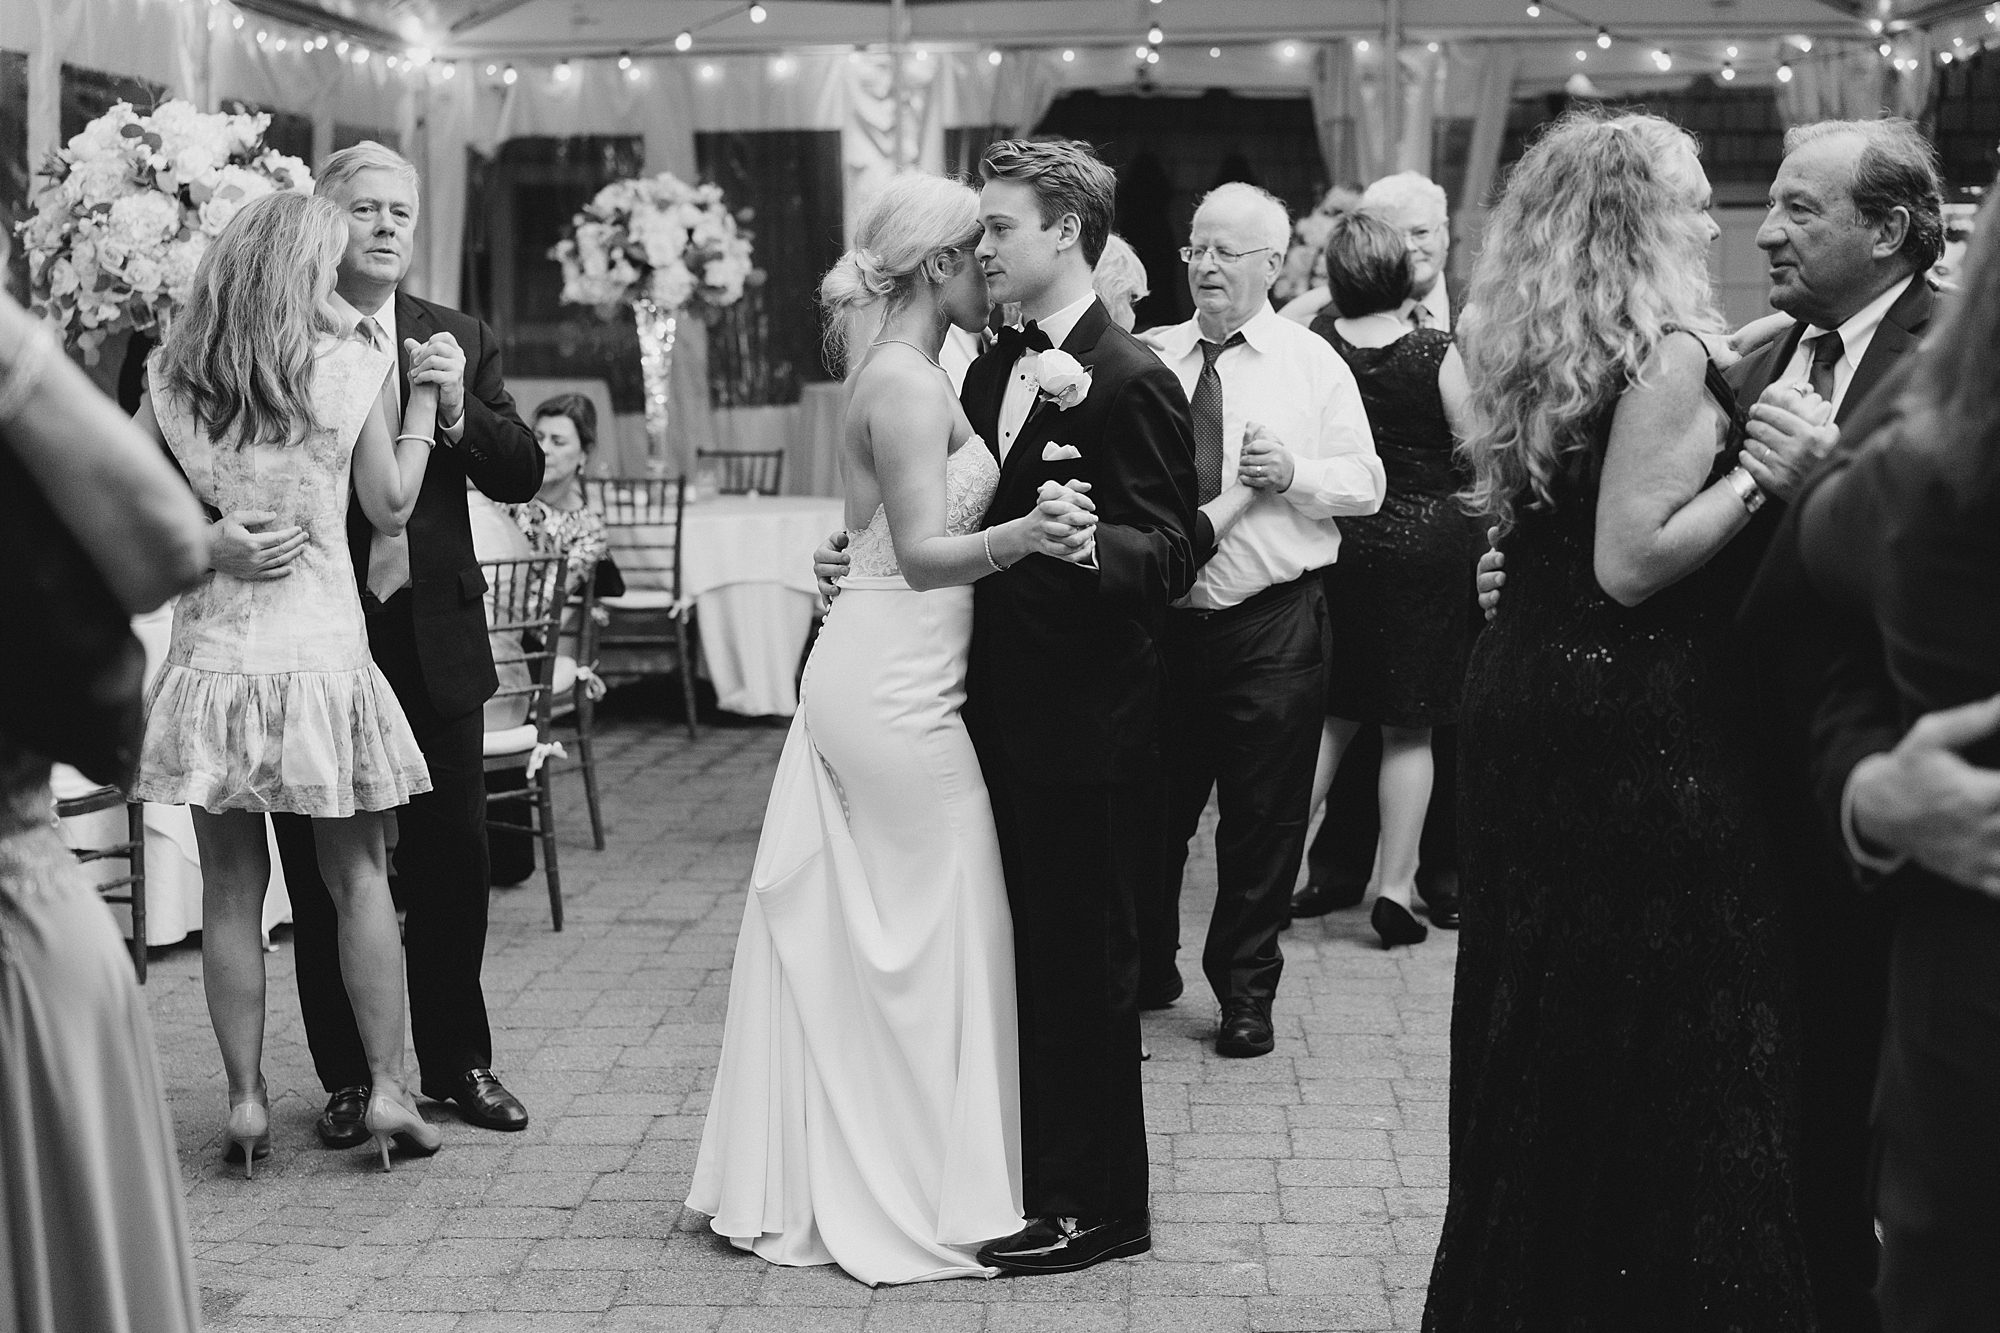 newlyweds dance on the dance floor